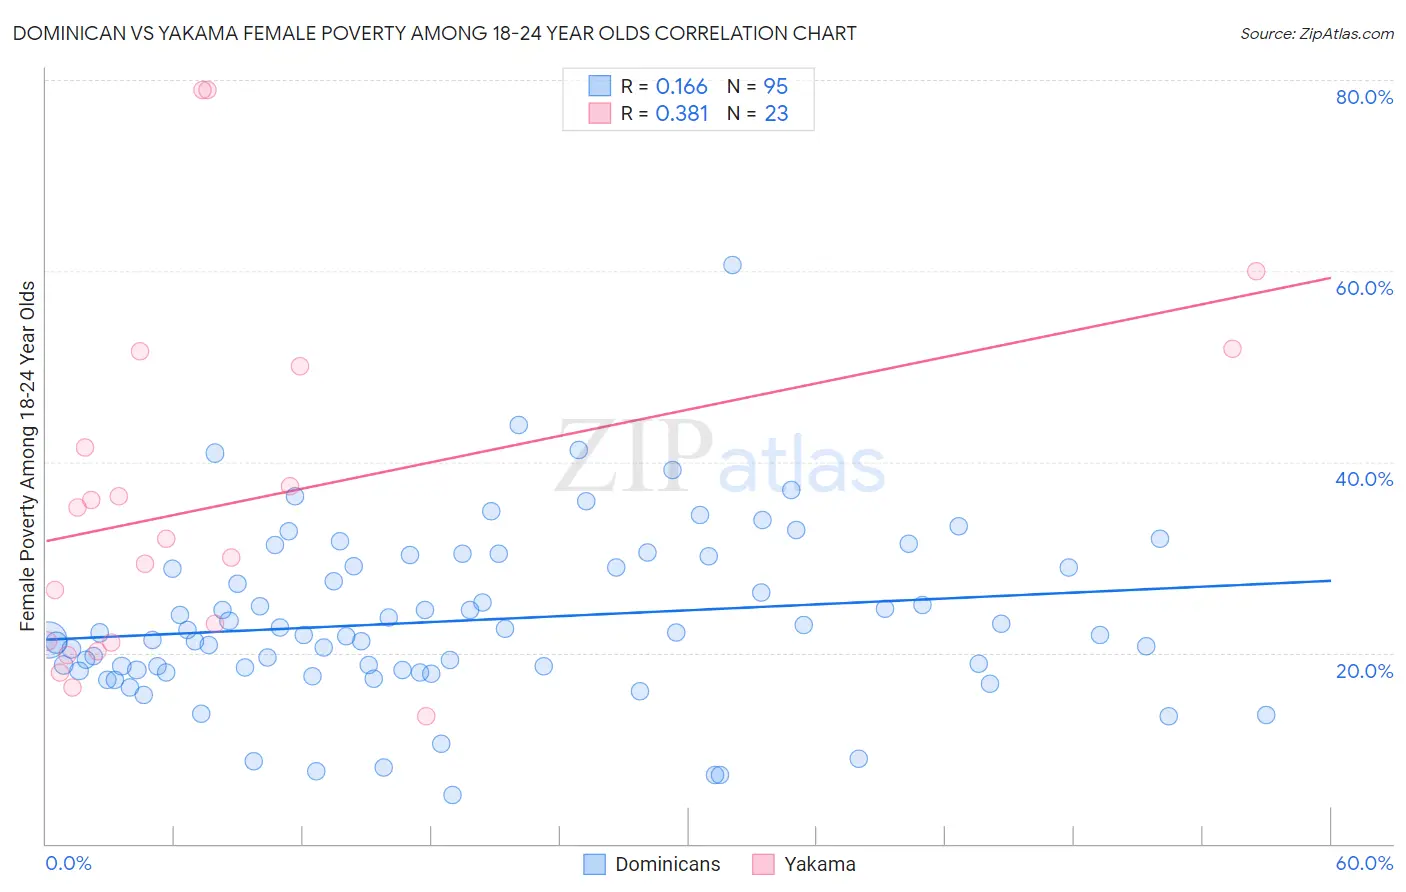 Dominican vs Yakama Female Poverty Among 18-24 Year Olds